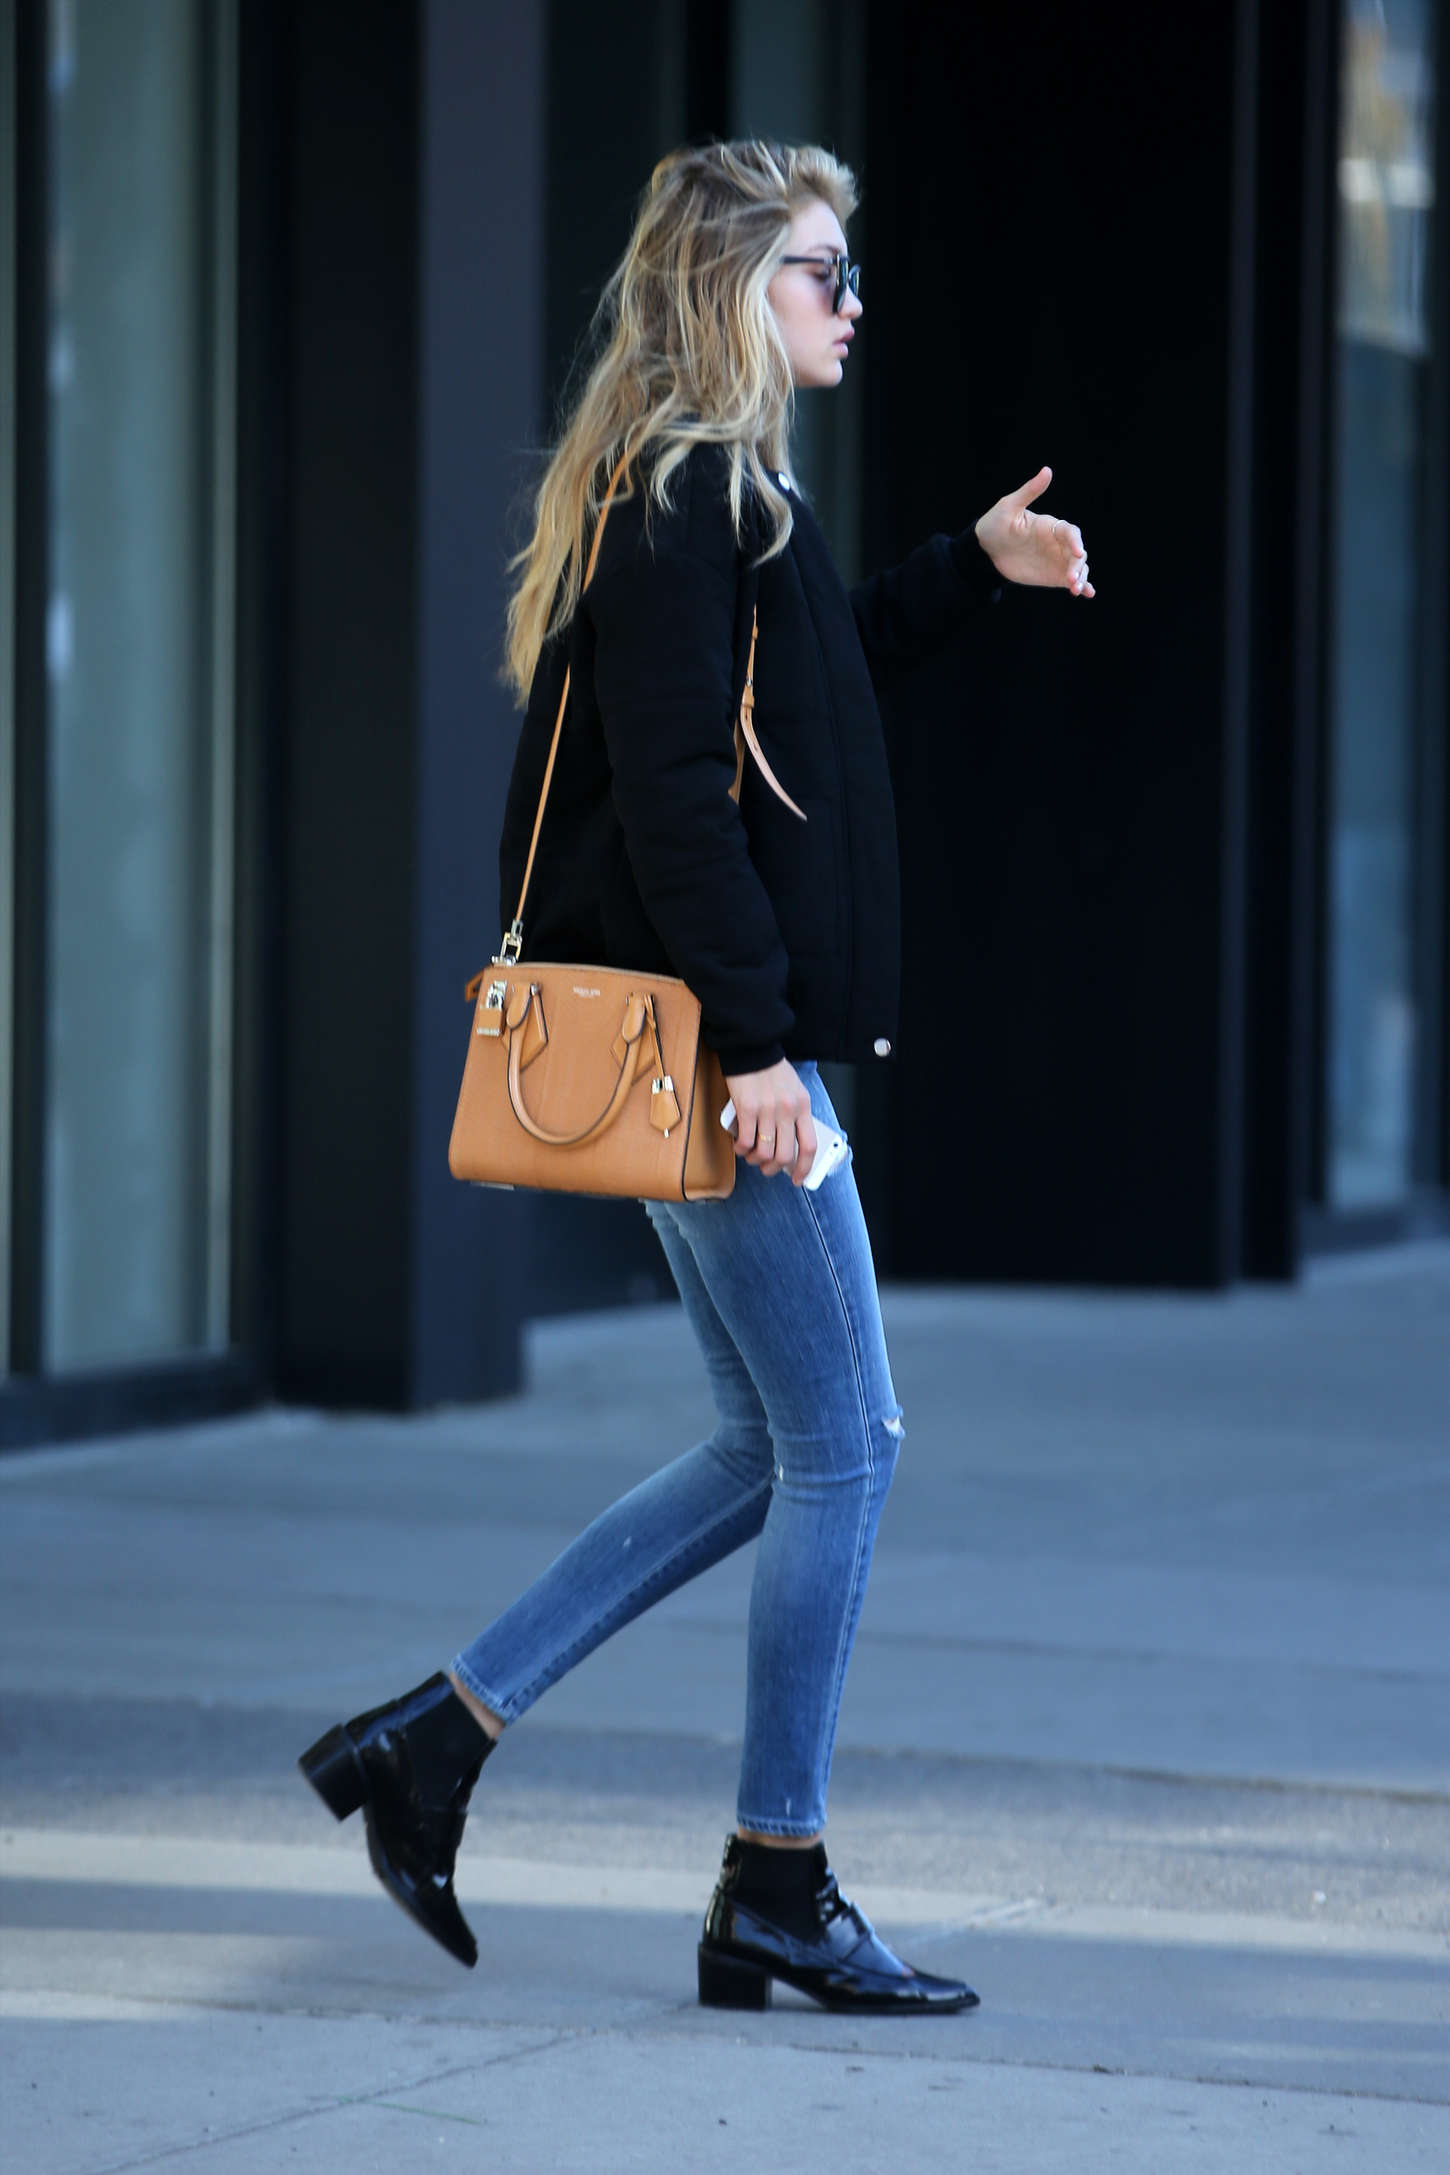 Gigi-Hadid-in-Tight-Jeans--18.jpg